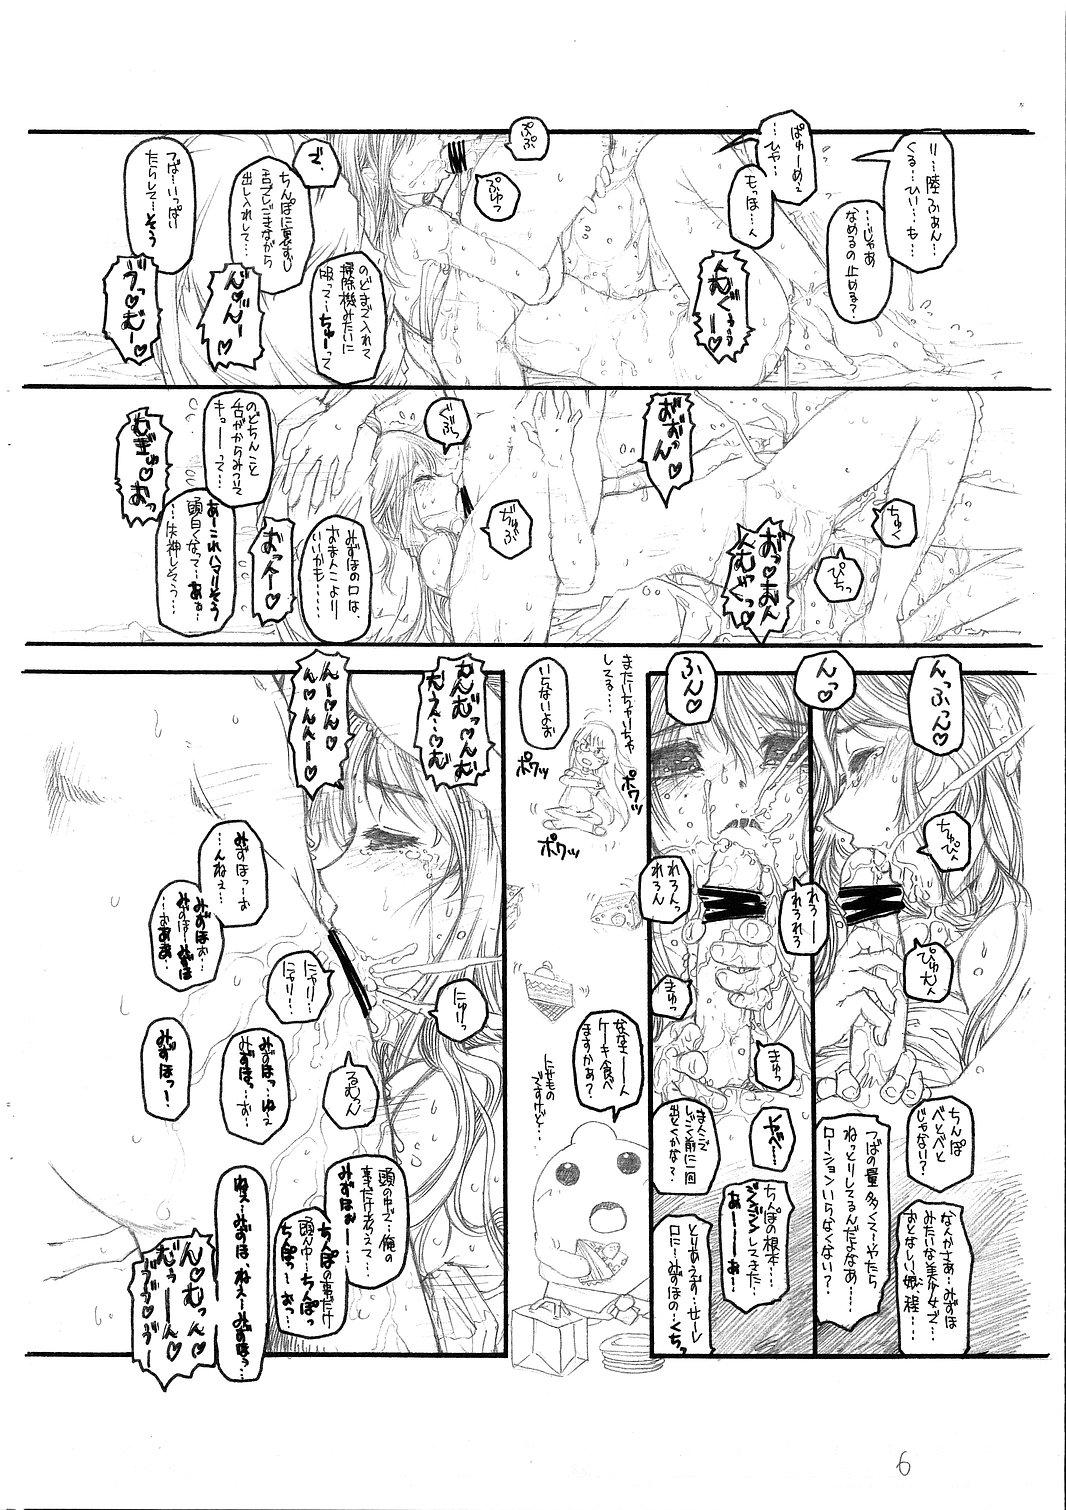 Playing Yamato Nadeshiko wo Omoikkiri Kegashitai! Picked Up - Page 8